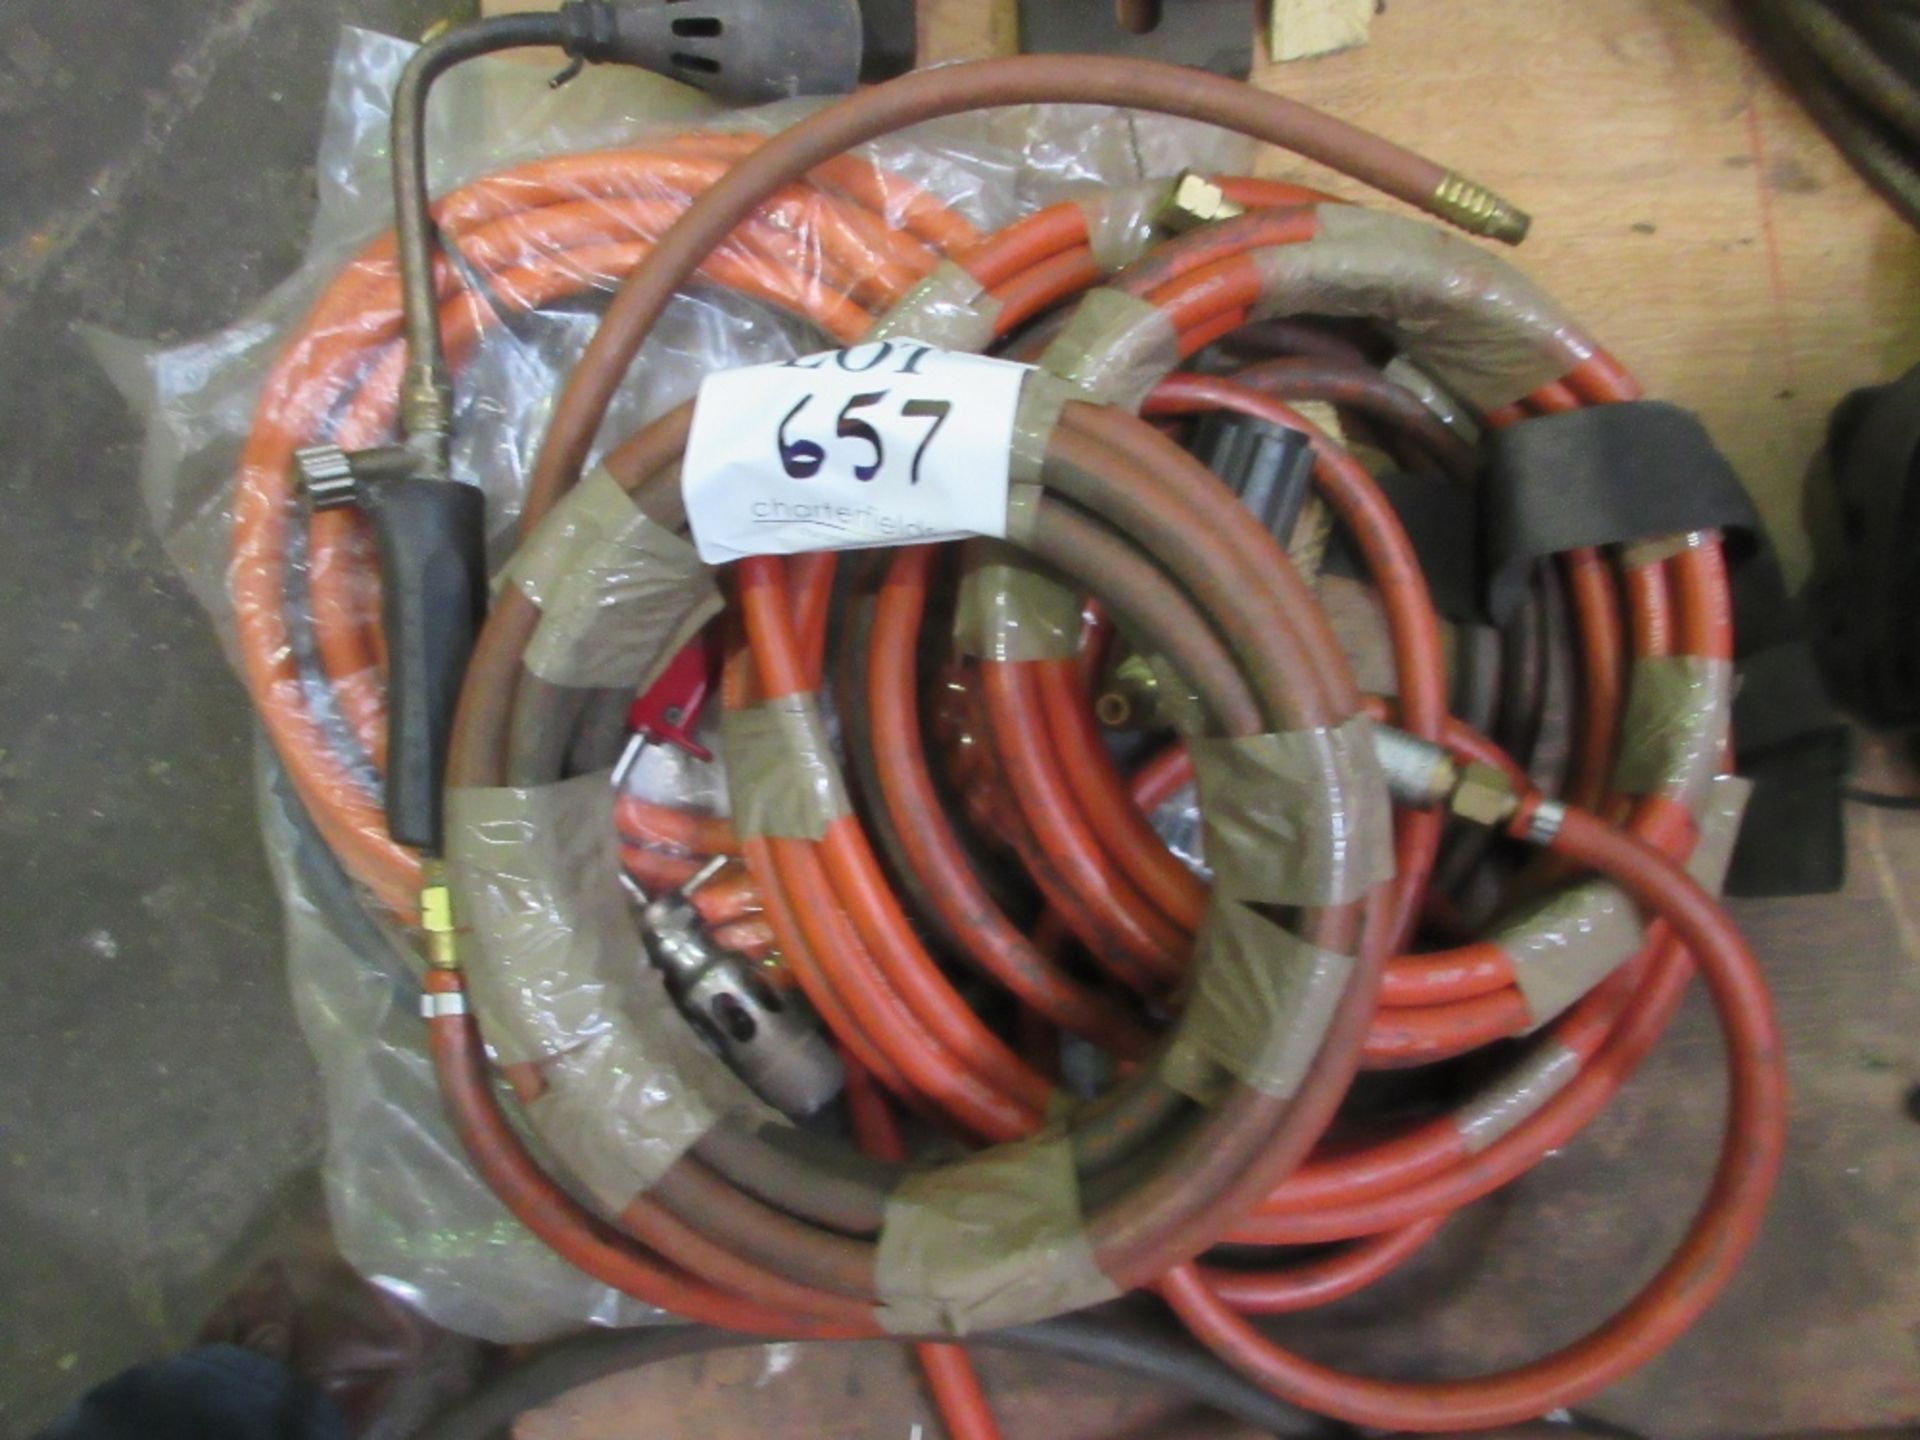 Propane torch, regulator and hoses